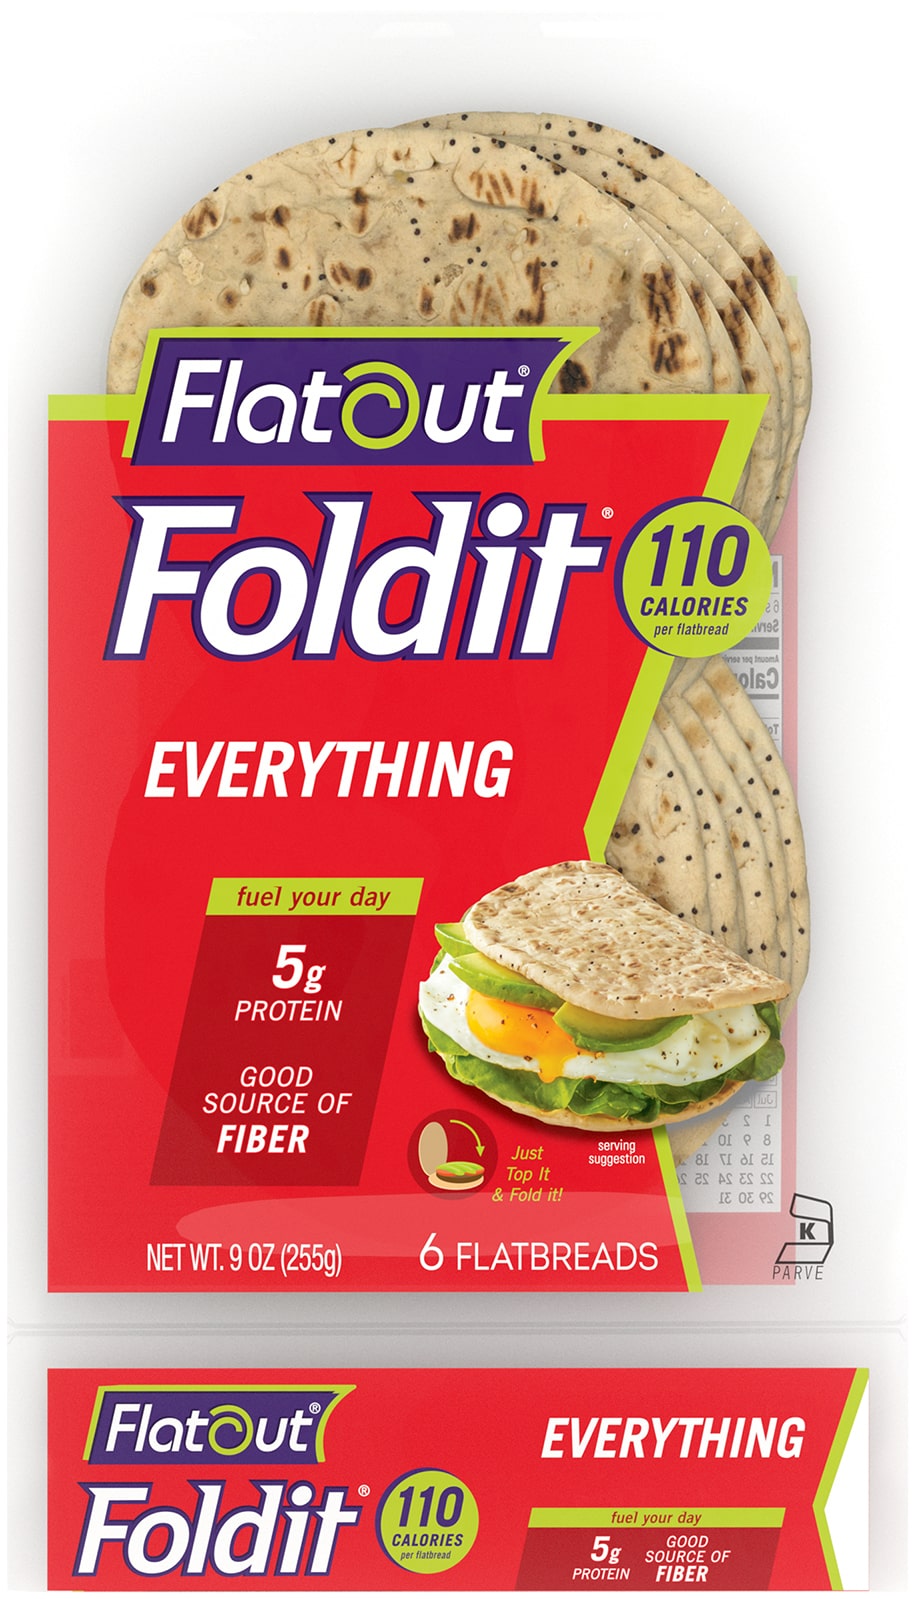 Flatout® Foldit Everything Flatbread